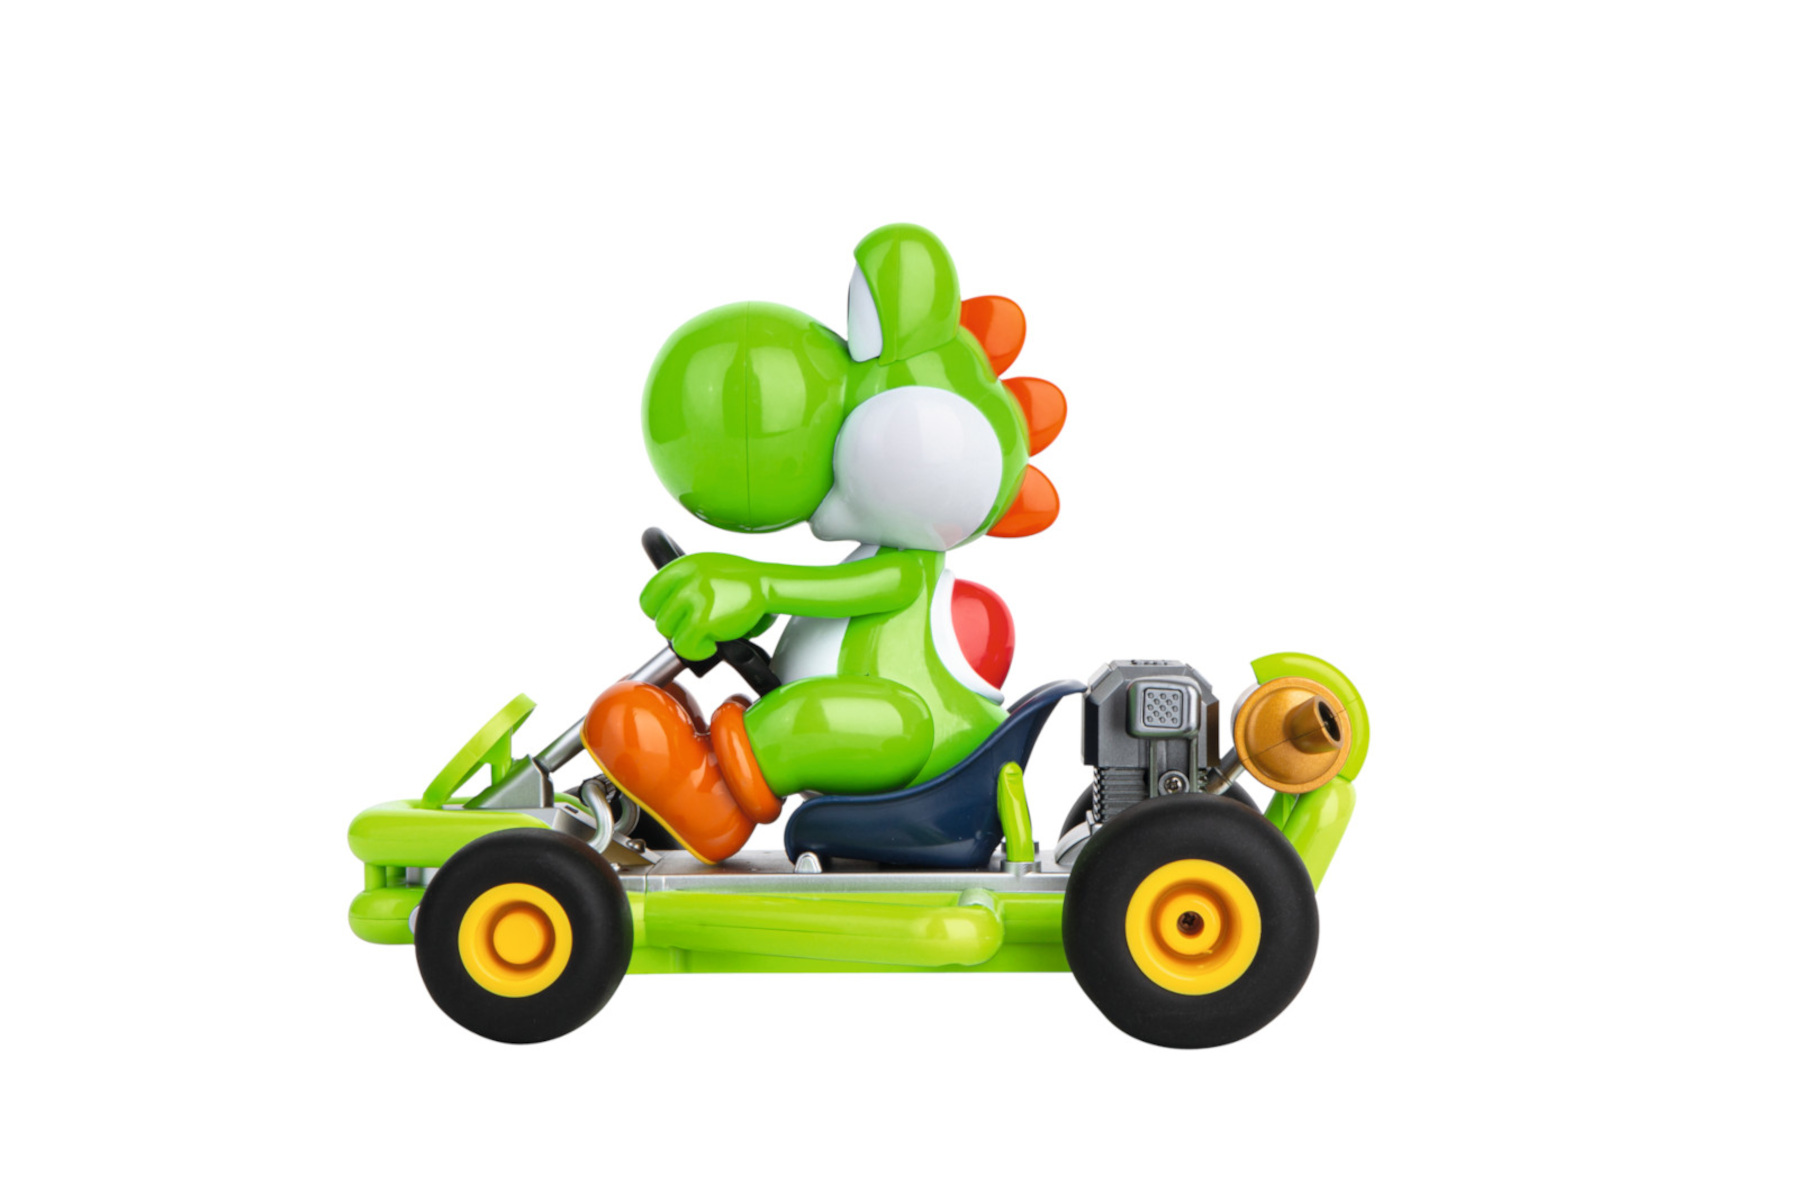 CARRERA RC Grün 6 Ferngesteuert RC-Fahrzeug, Kart Pipe Kart ab Yoshi 9 Mario Jahren km/h